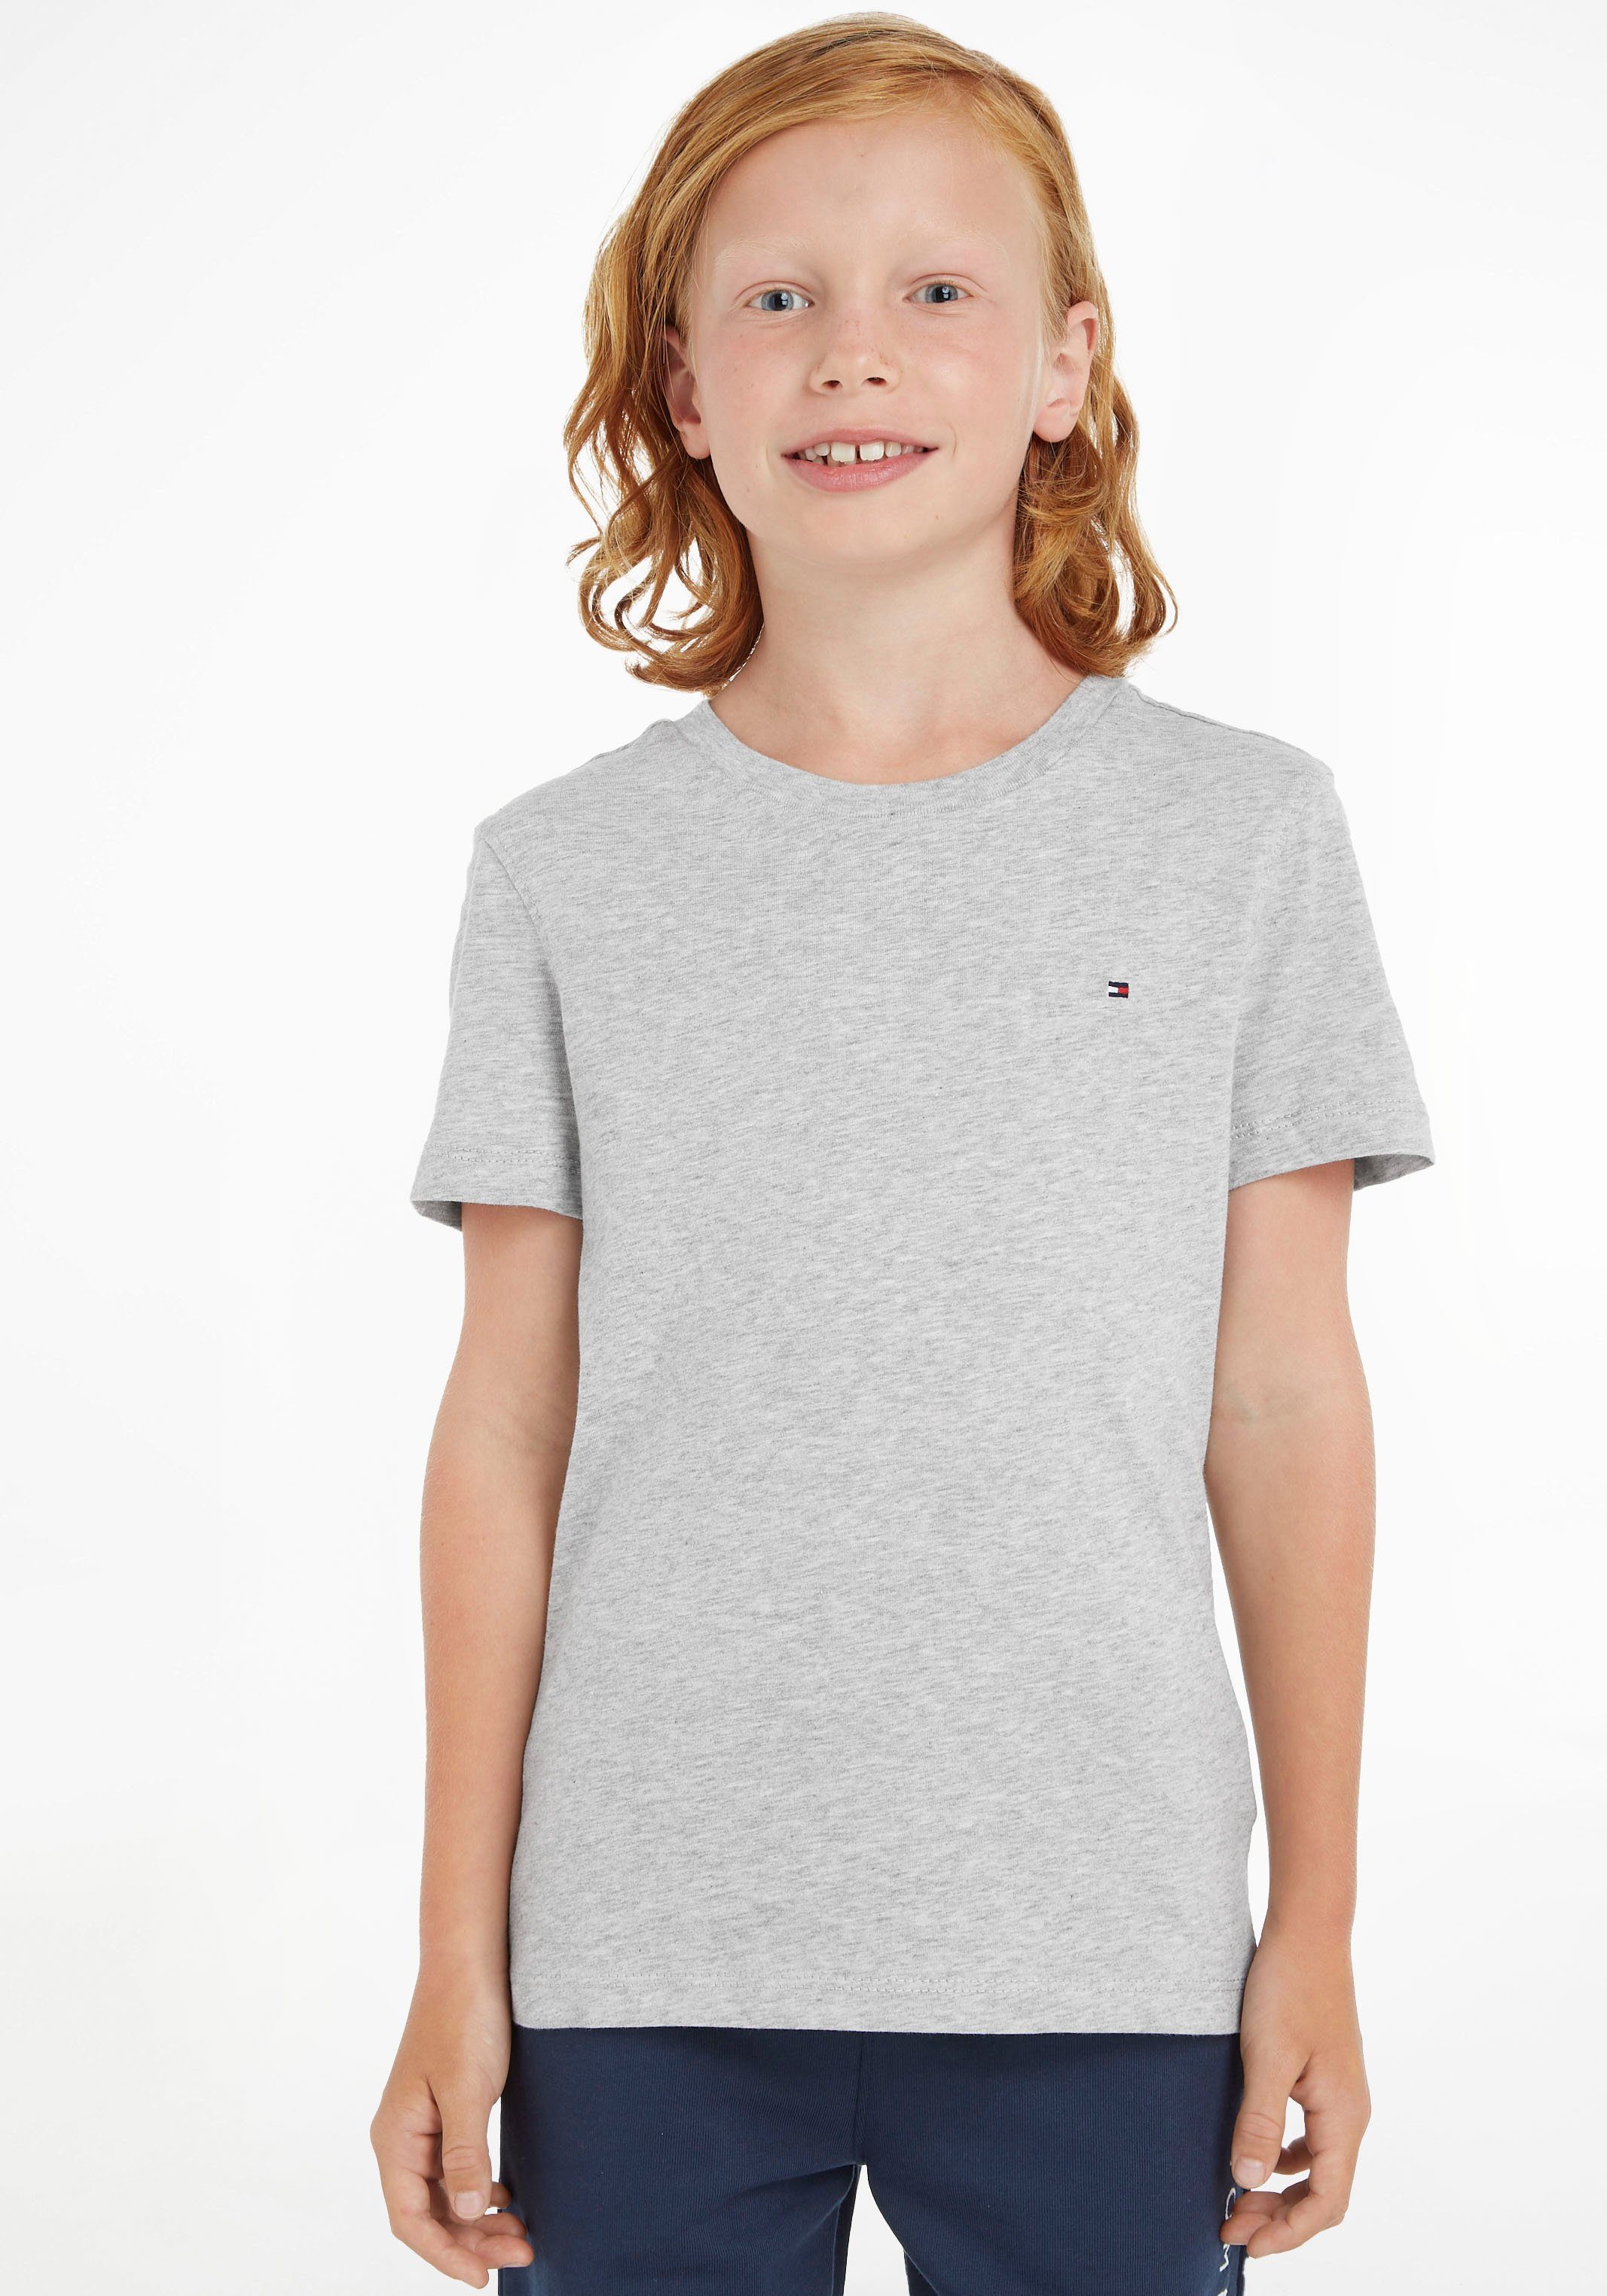 Tommy Hilfiger T-Shirt BOYS BASIC CN KNIT Kinder Kids Junior MiniMe | T-Shirts